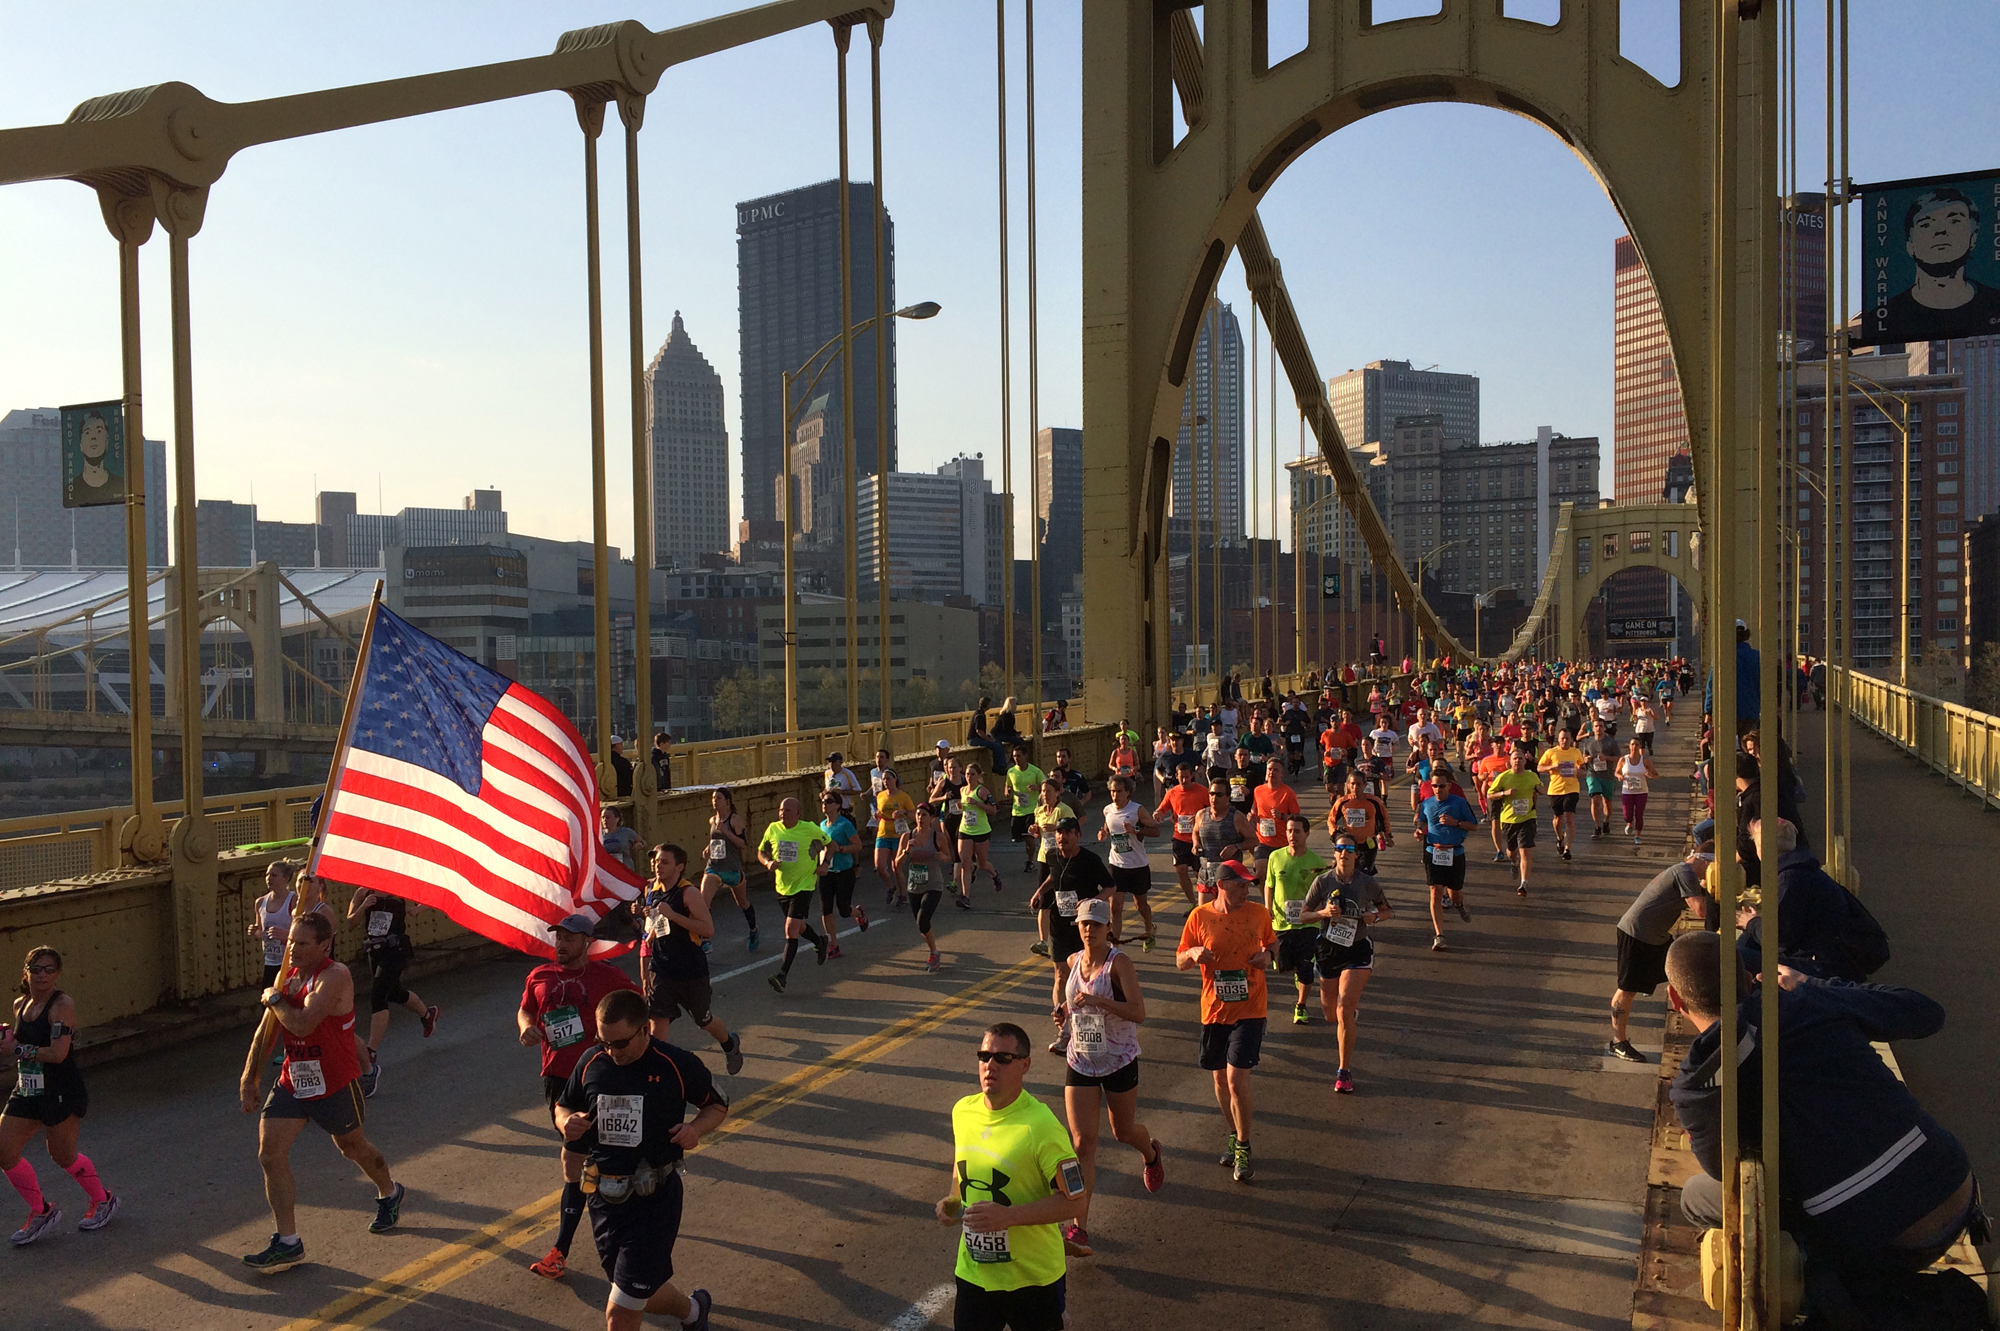 A flag-waving runner makes his way across the Andy Warhol Bridge. (Steve Mellon/Post-Gazette)